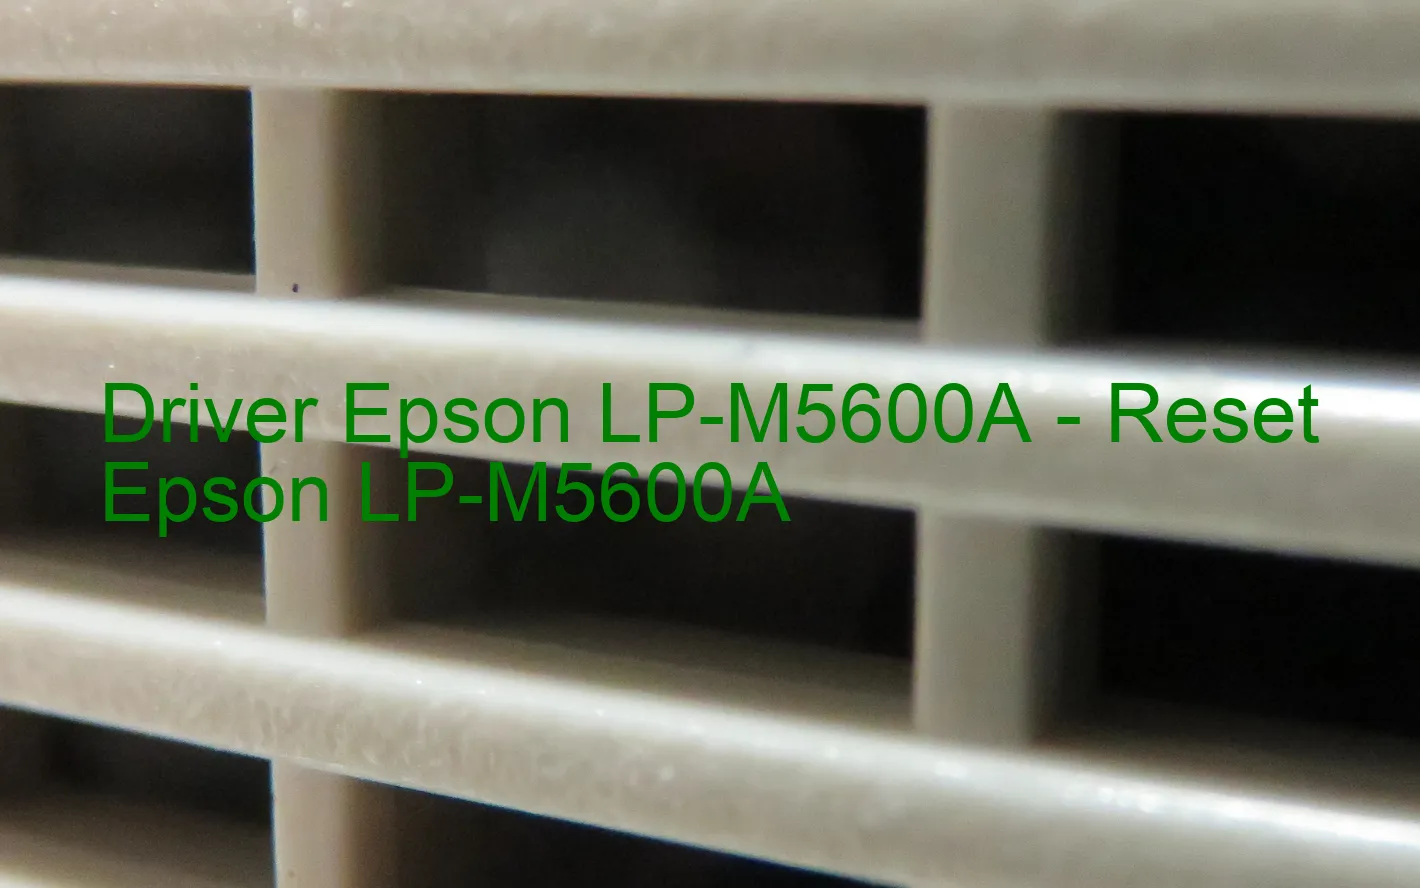 Epson LP-M5600Aのドライバー、Epson LP-M5600Aのリセットソフトウェア